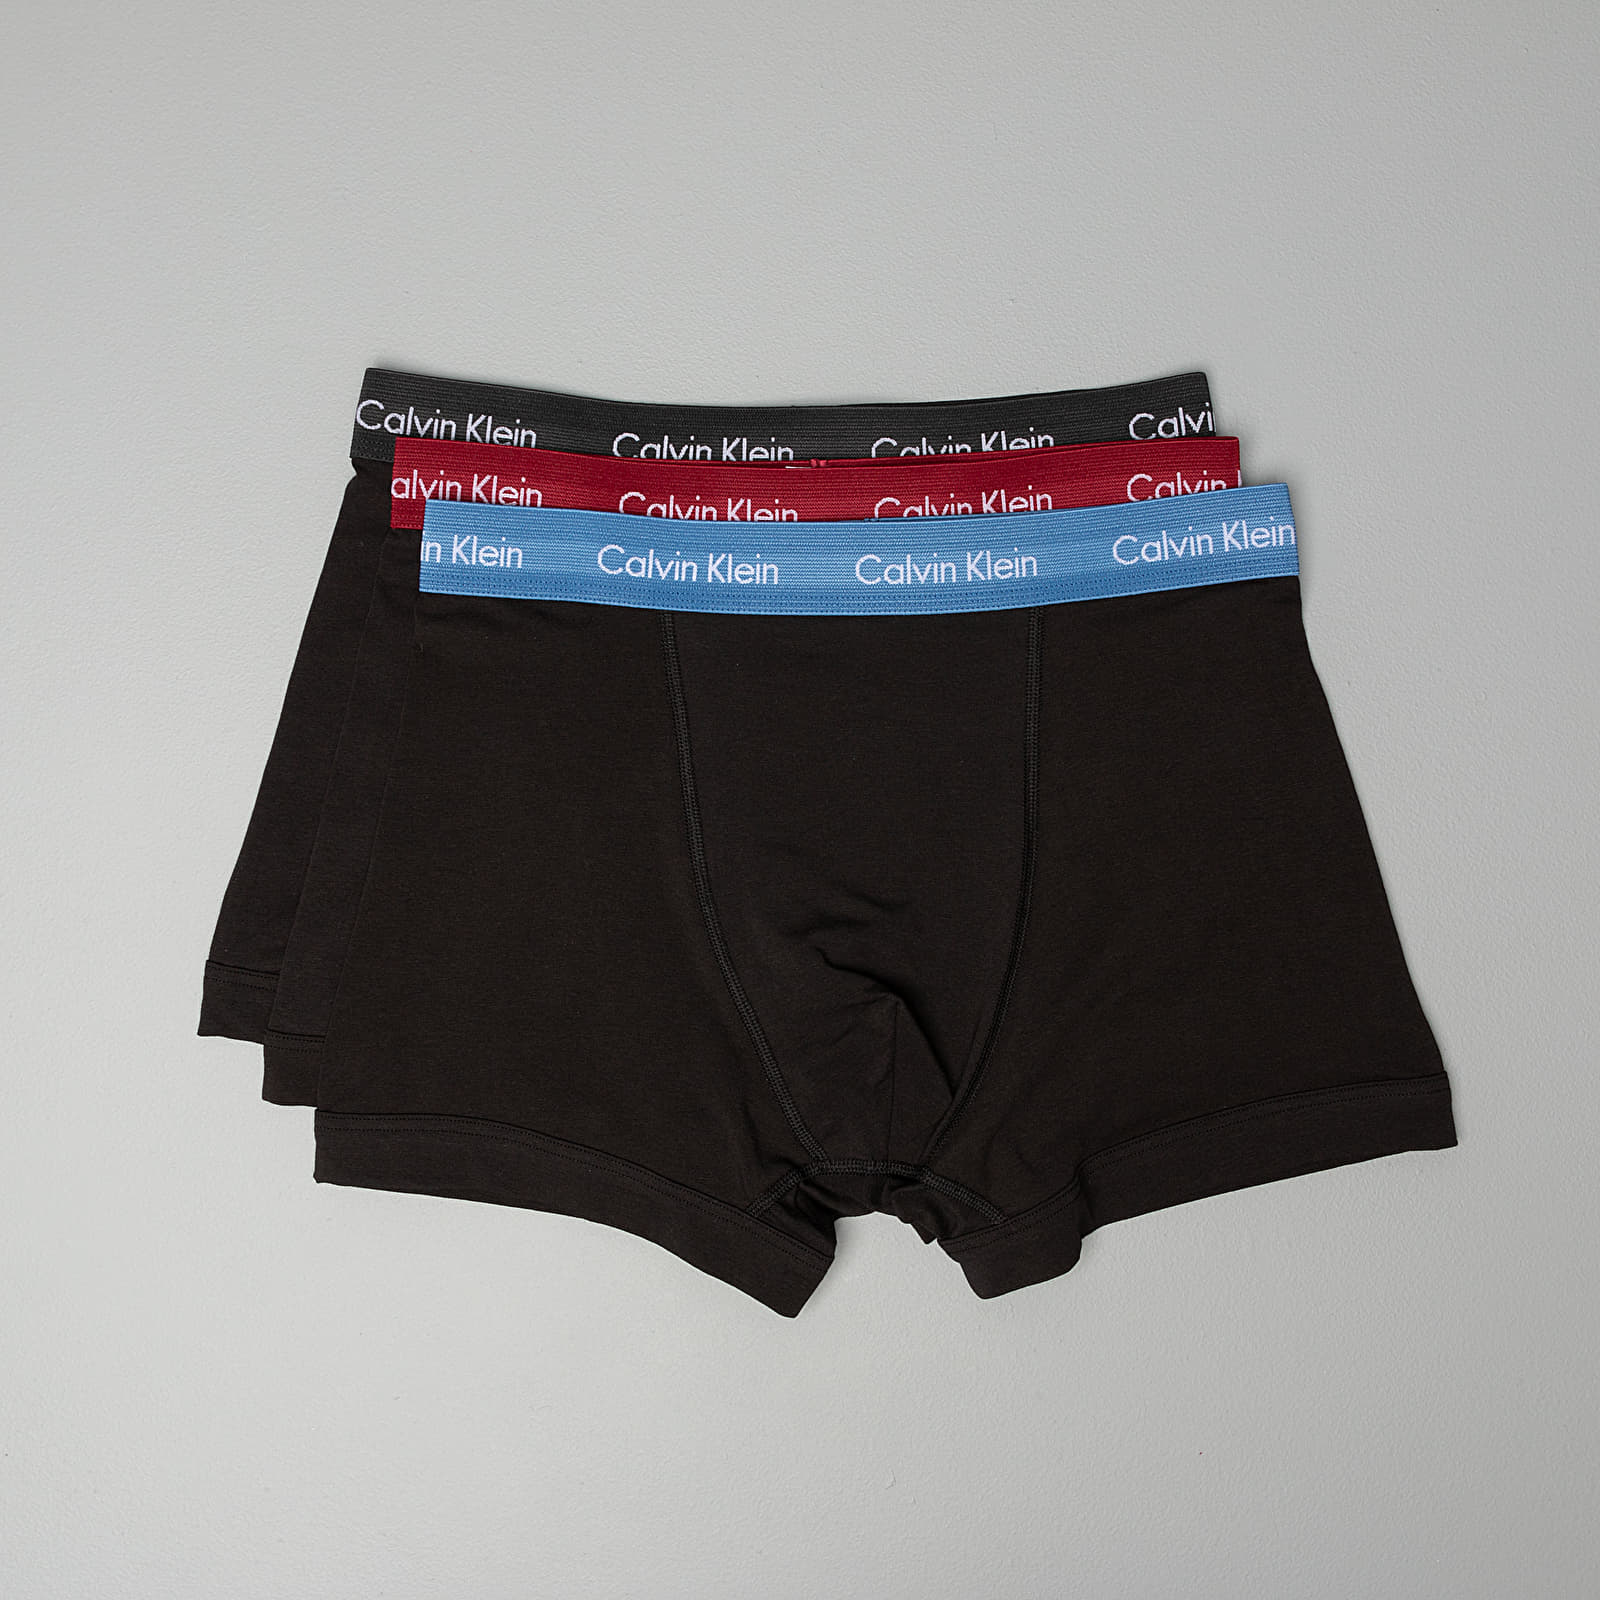 Boxer shorts Calvin Klein Cotton Stretch 3 Pack Trunk Multicolor